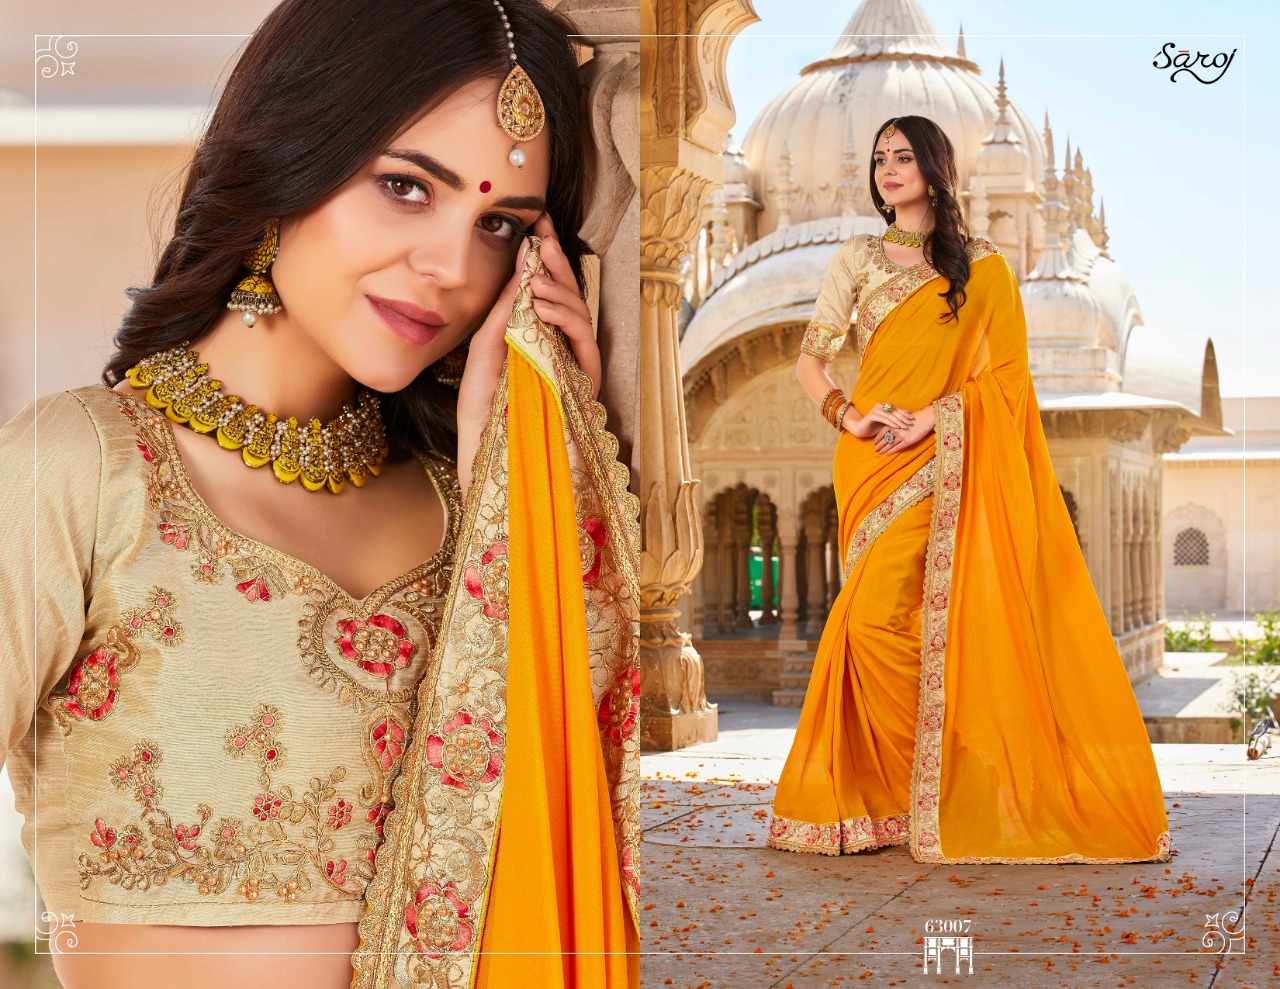 saroj star light 3 colorful fancy collection of sarees